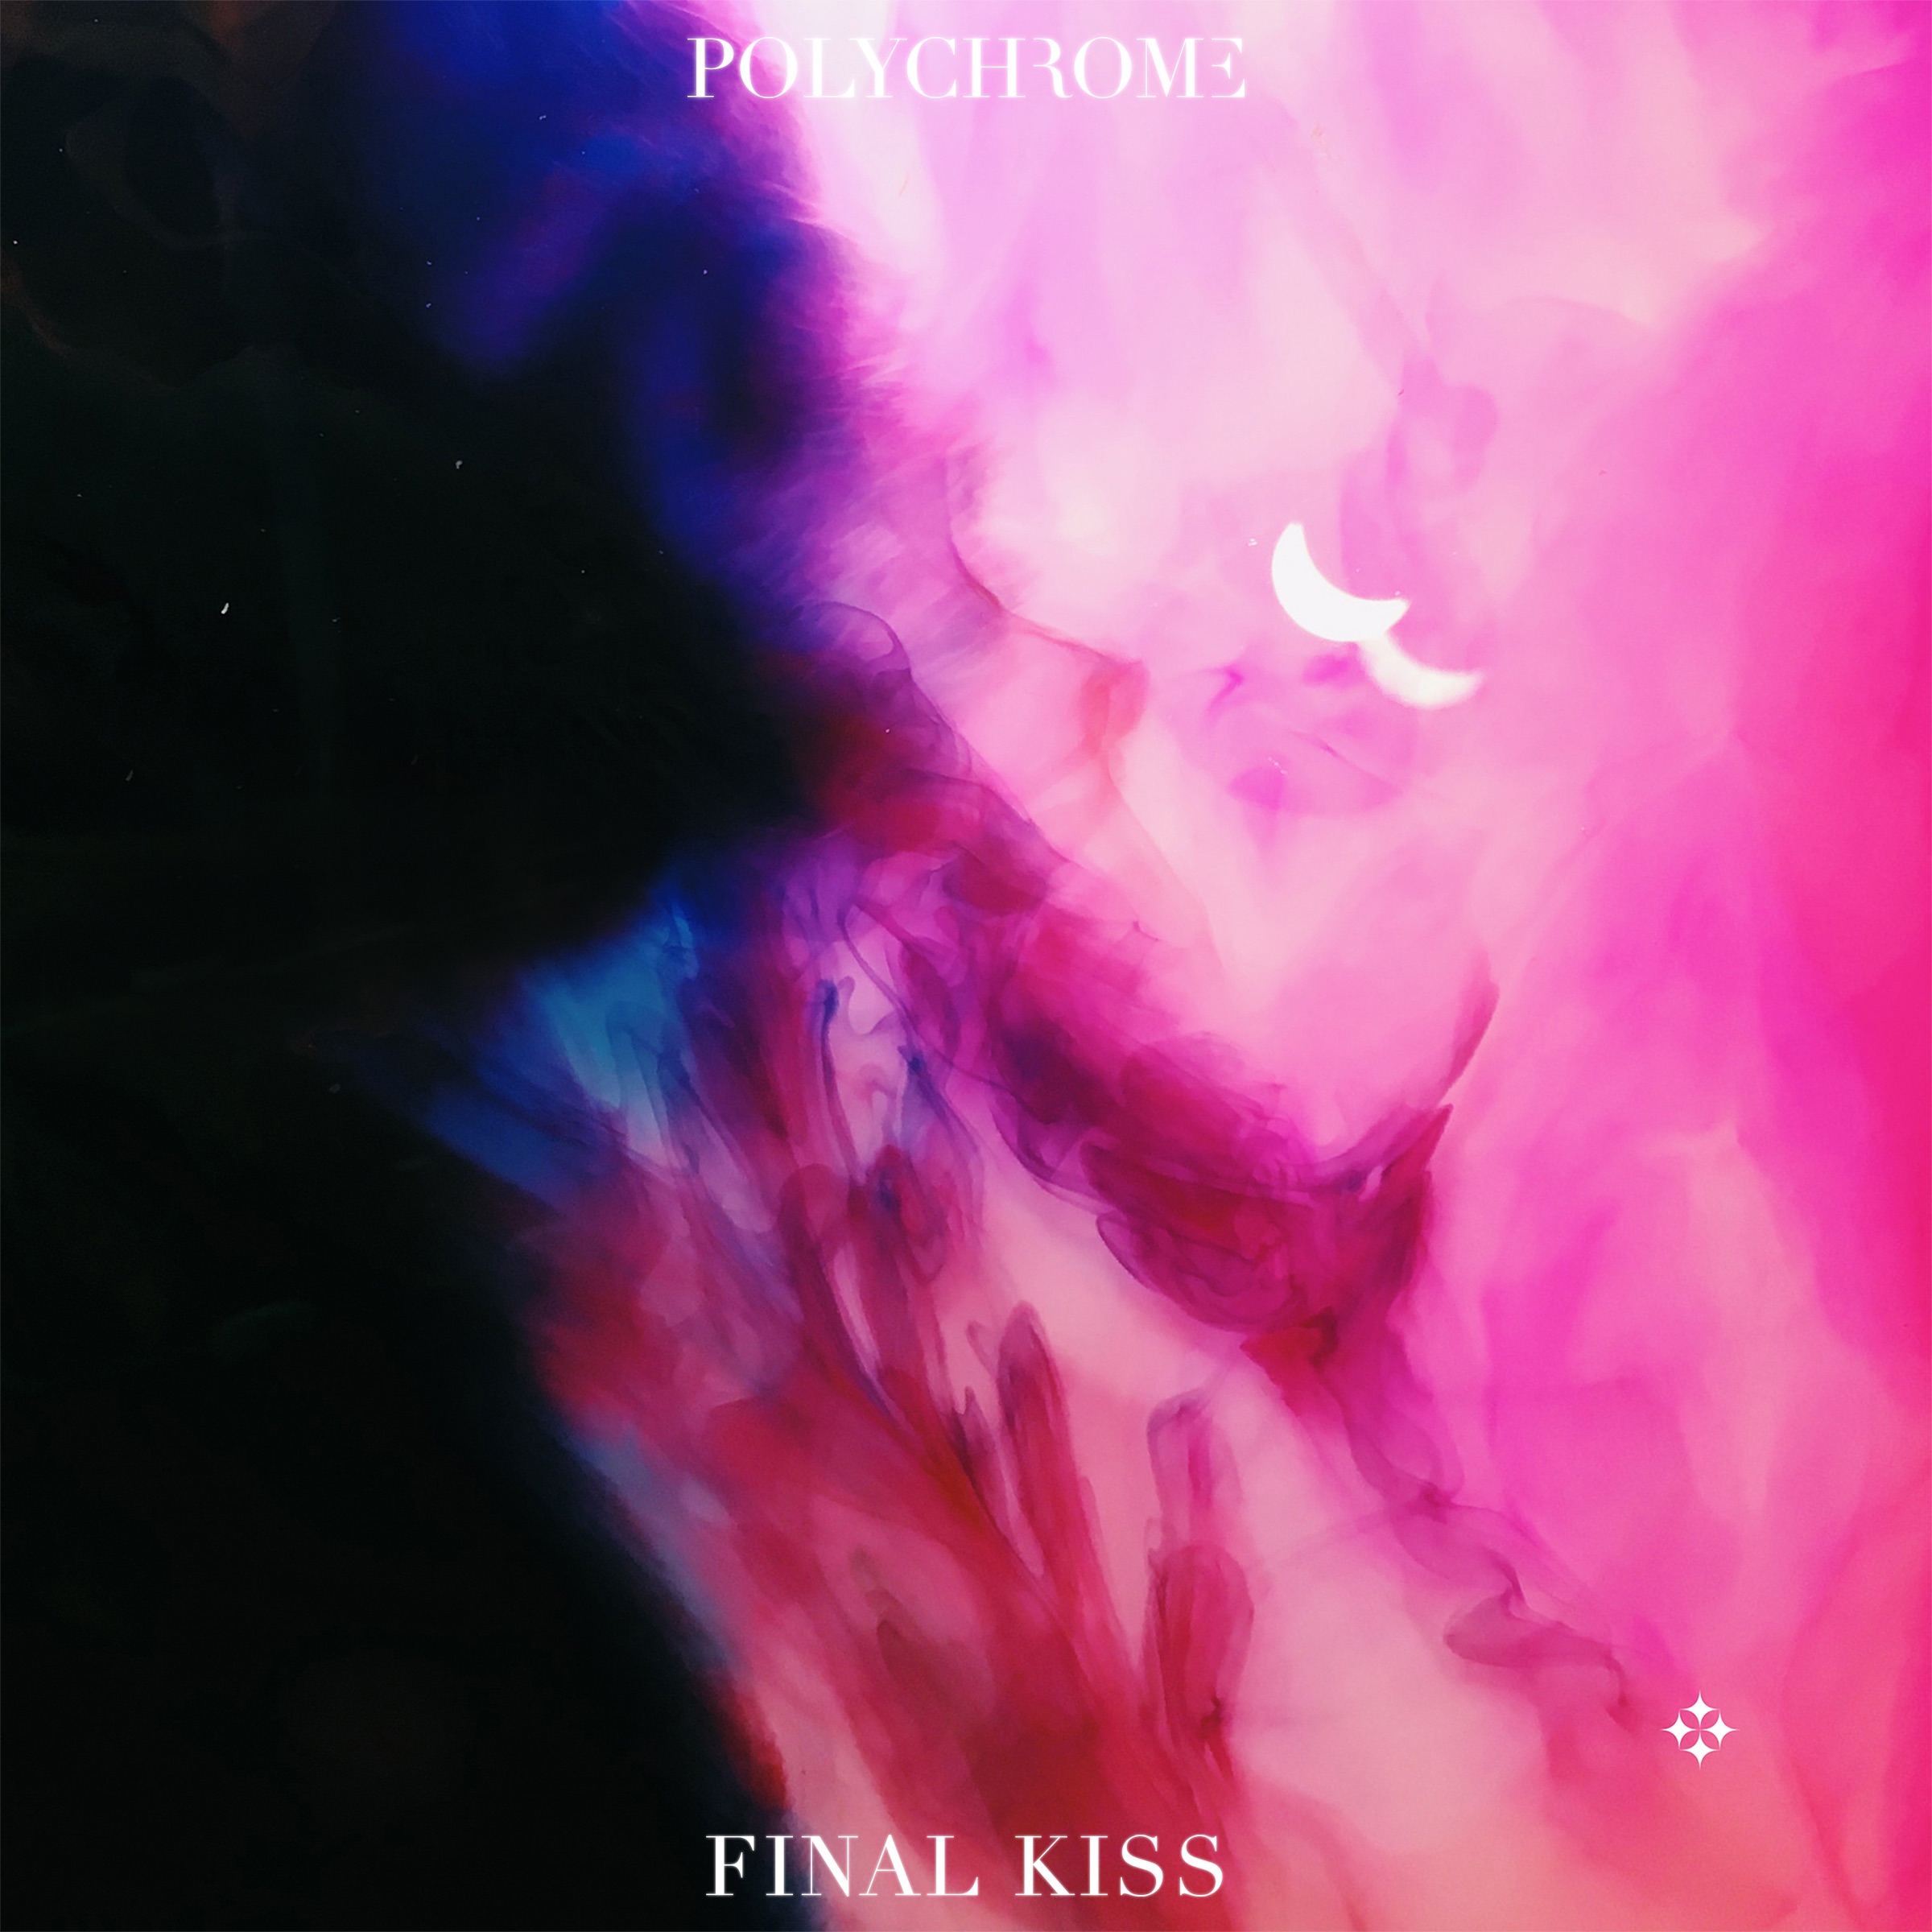 Polychrome – “Final Kiss”